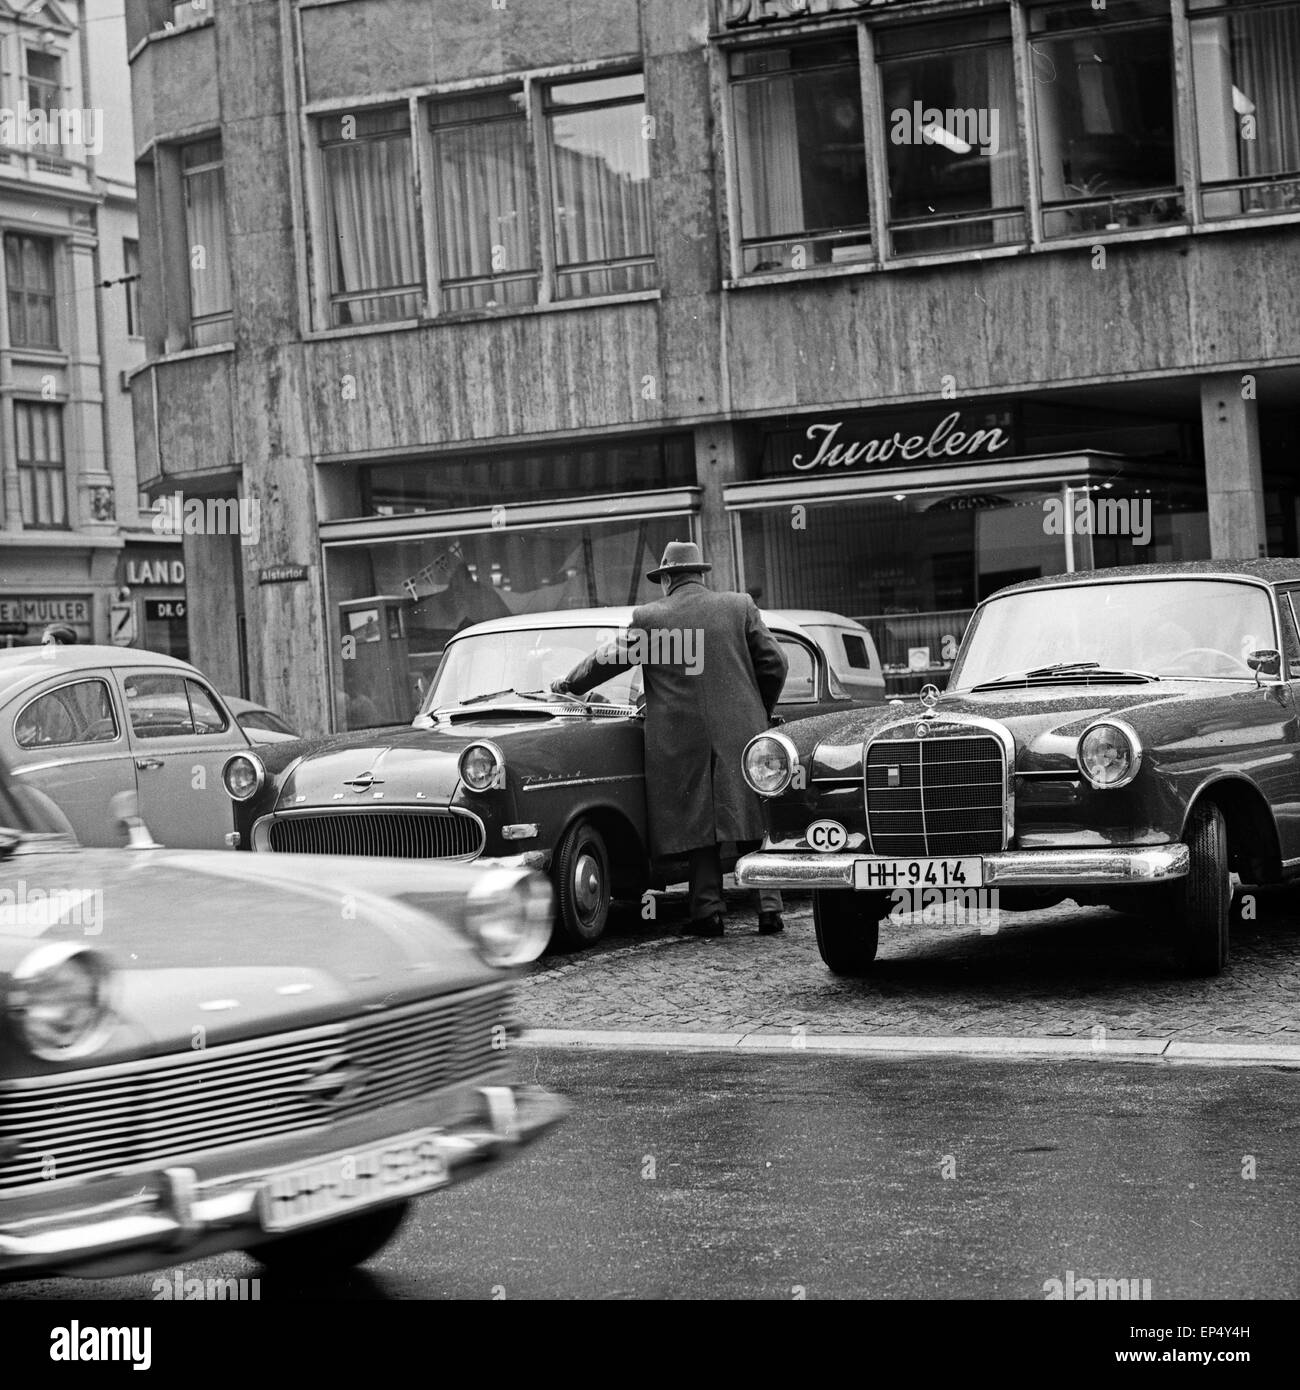 Straßenszene am Alstertor in Hamburg, Deutschland 1960er Jahre. Street scene at Alstertor street in Hamburg, Germany 1960s. Stock Photo